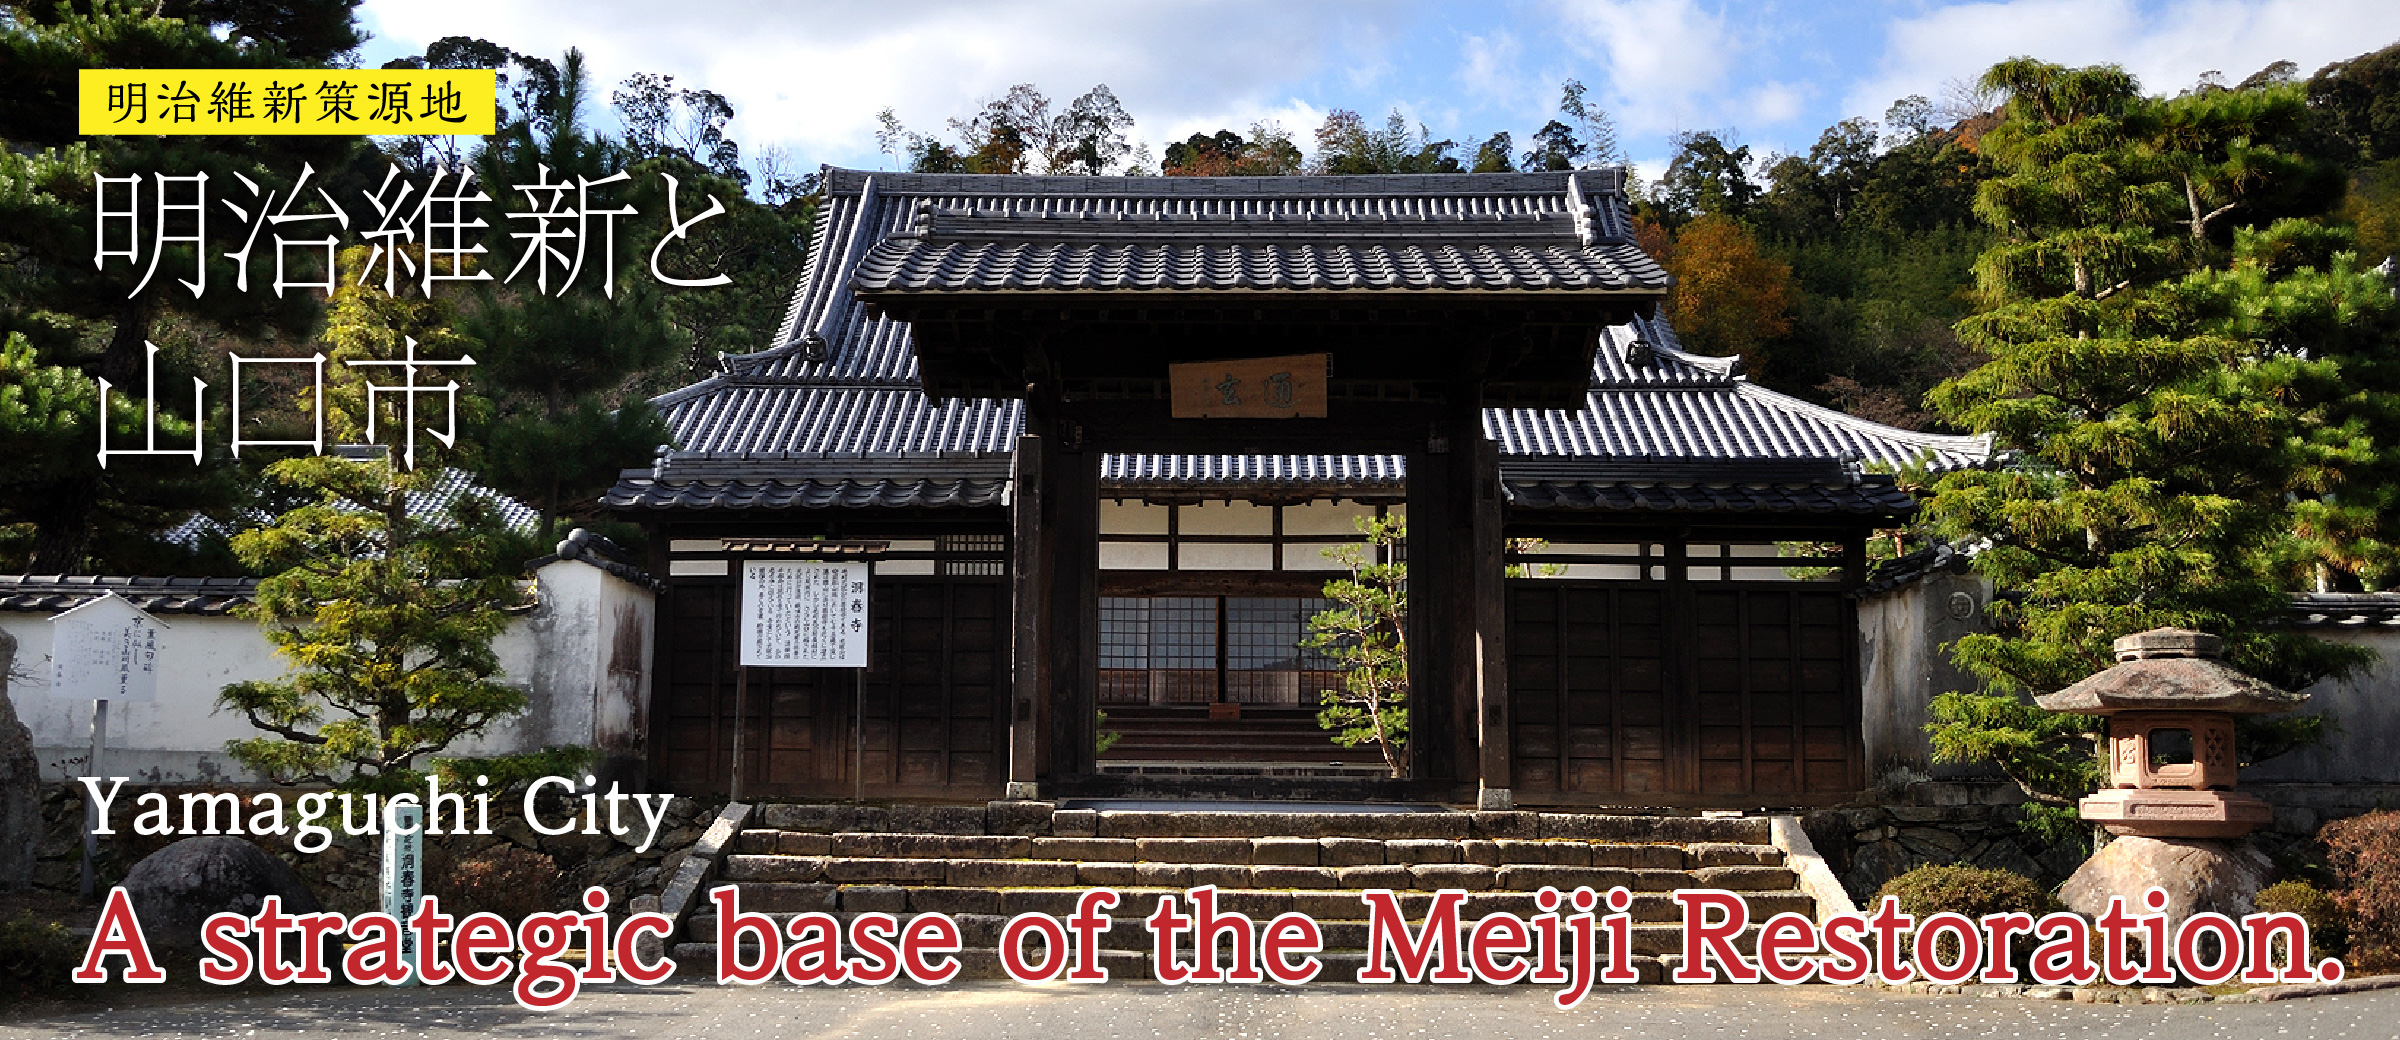 a strategic base of the Meiji Restoration.